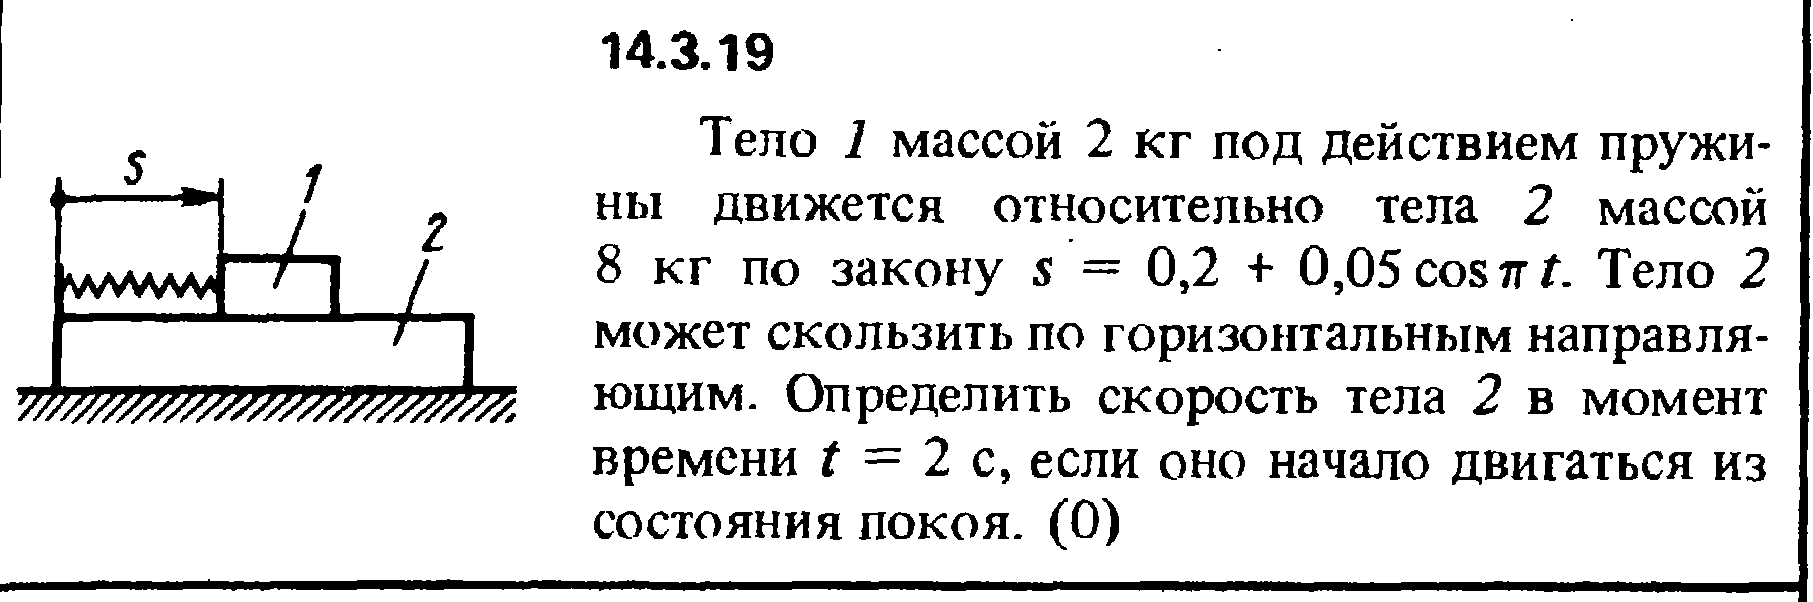 Решение задачи 14.3.19 из сборника Кепе О.Е. 1989 года